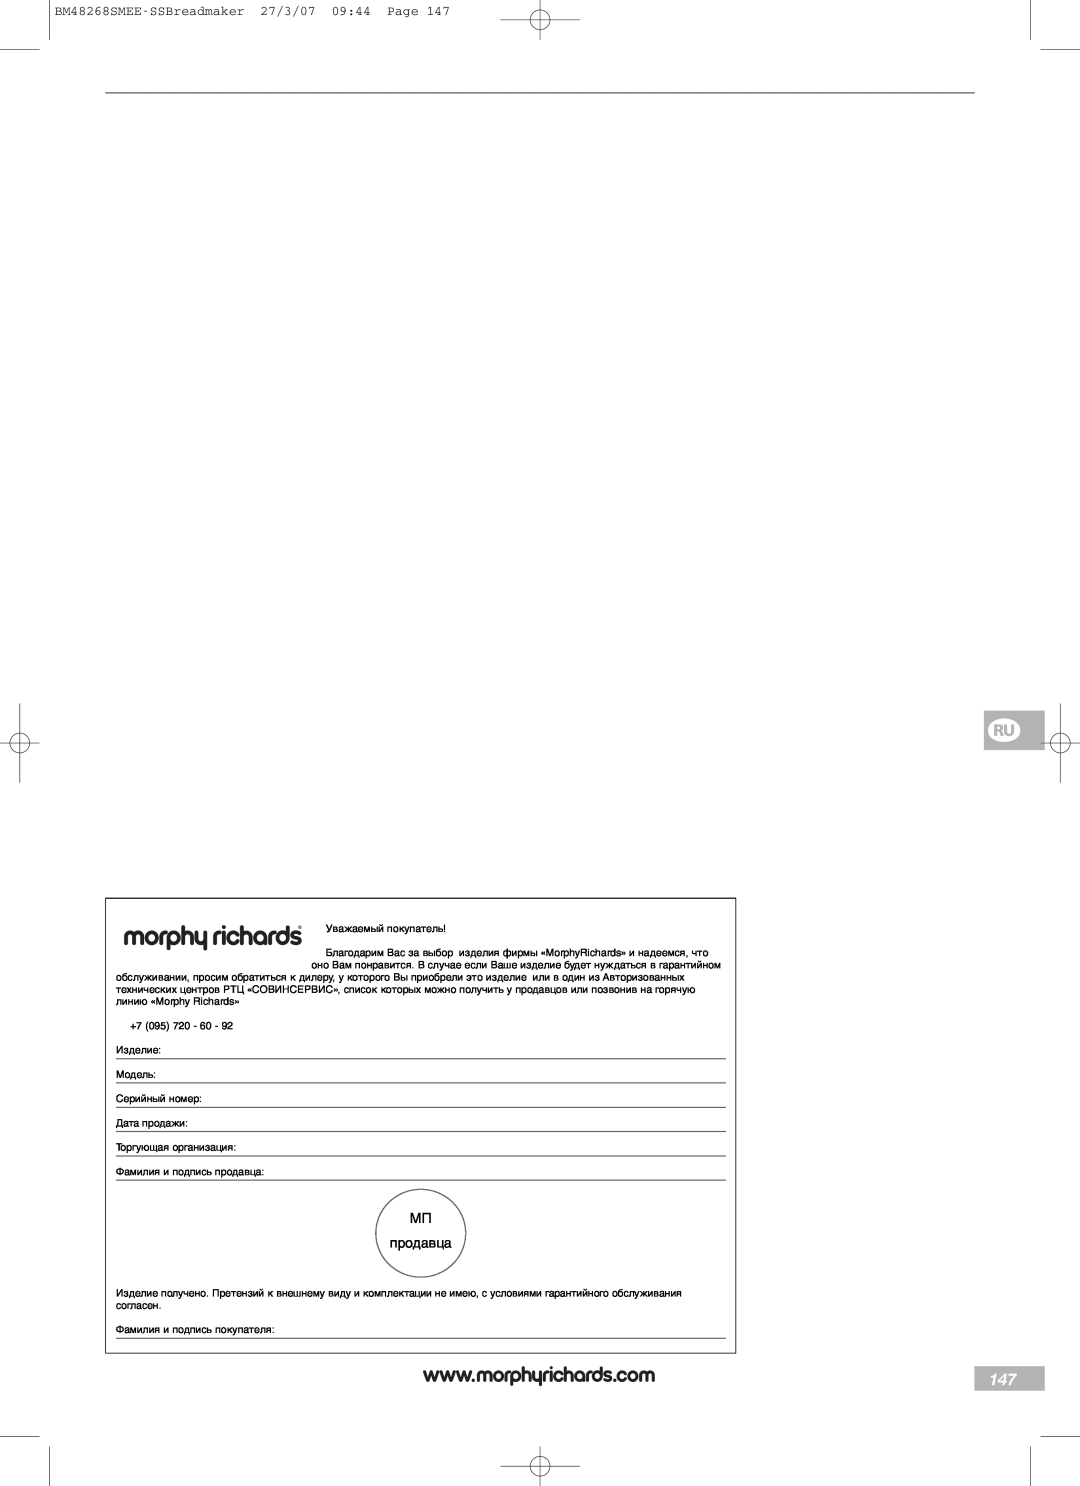 Morphy Richards manual BM48268SMEE-SSBreadmaker27/3/07 09:44 Page, МП продавца 